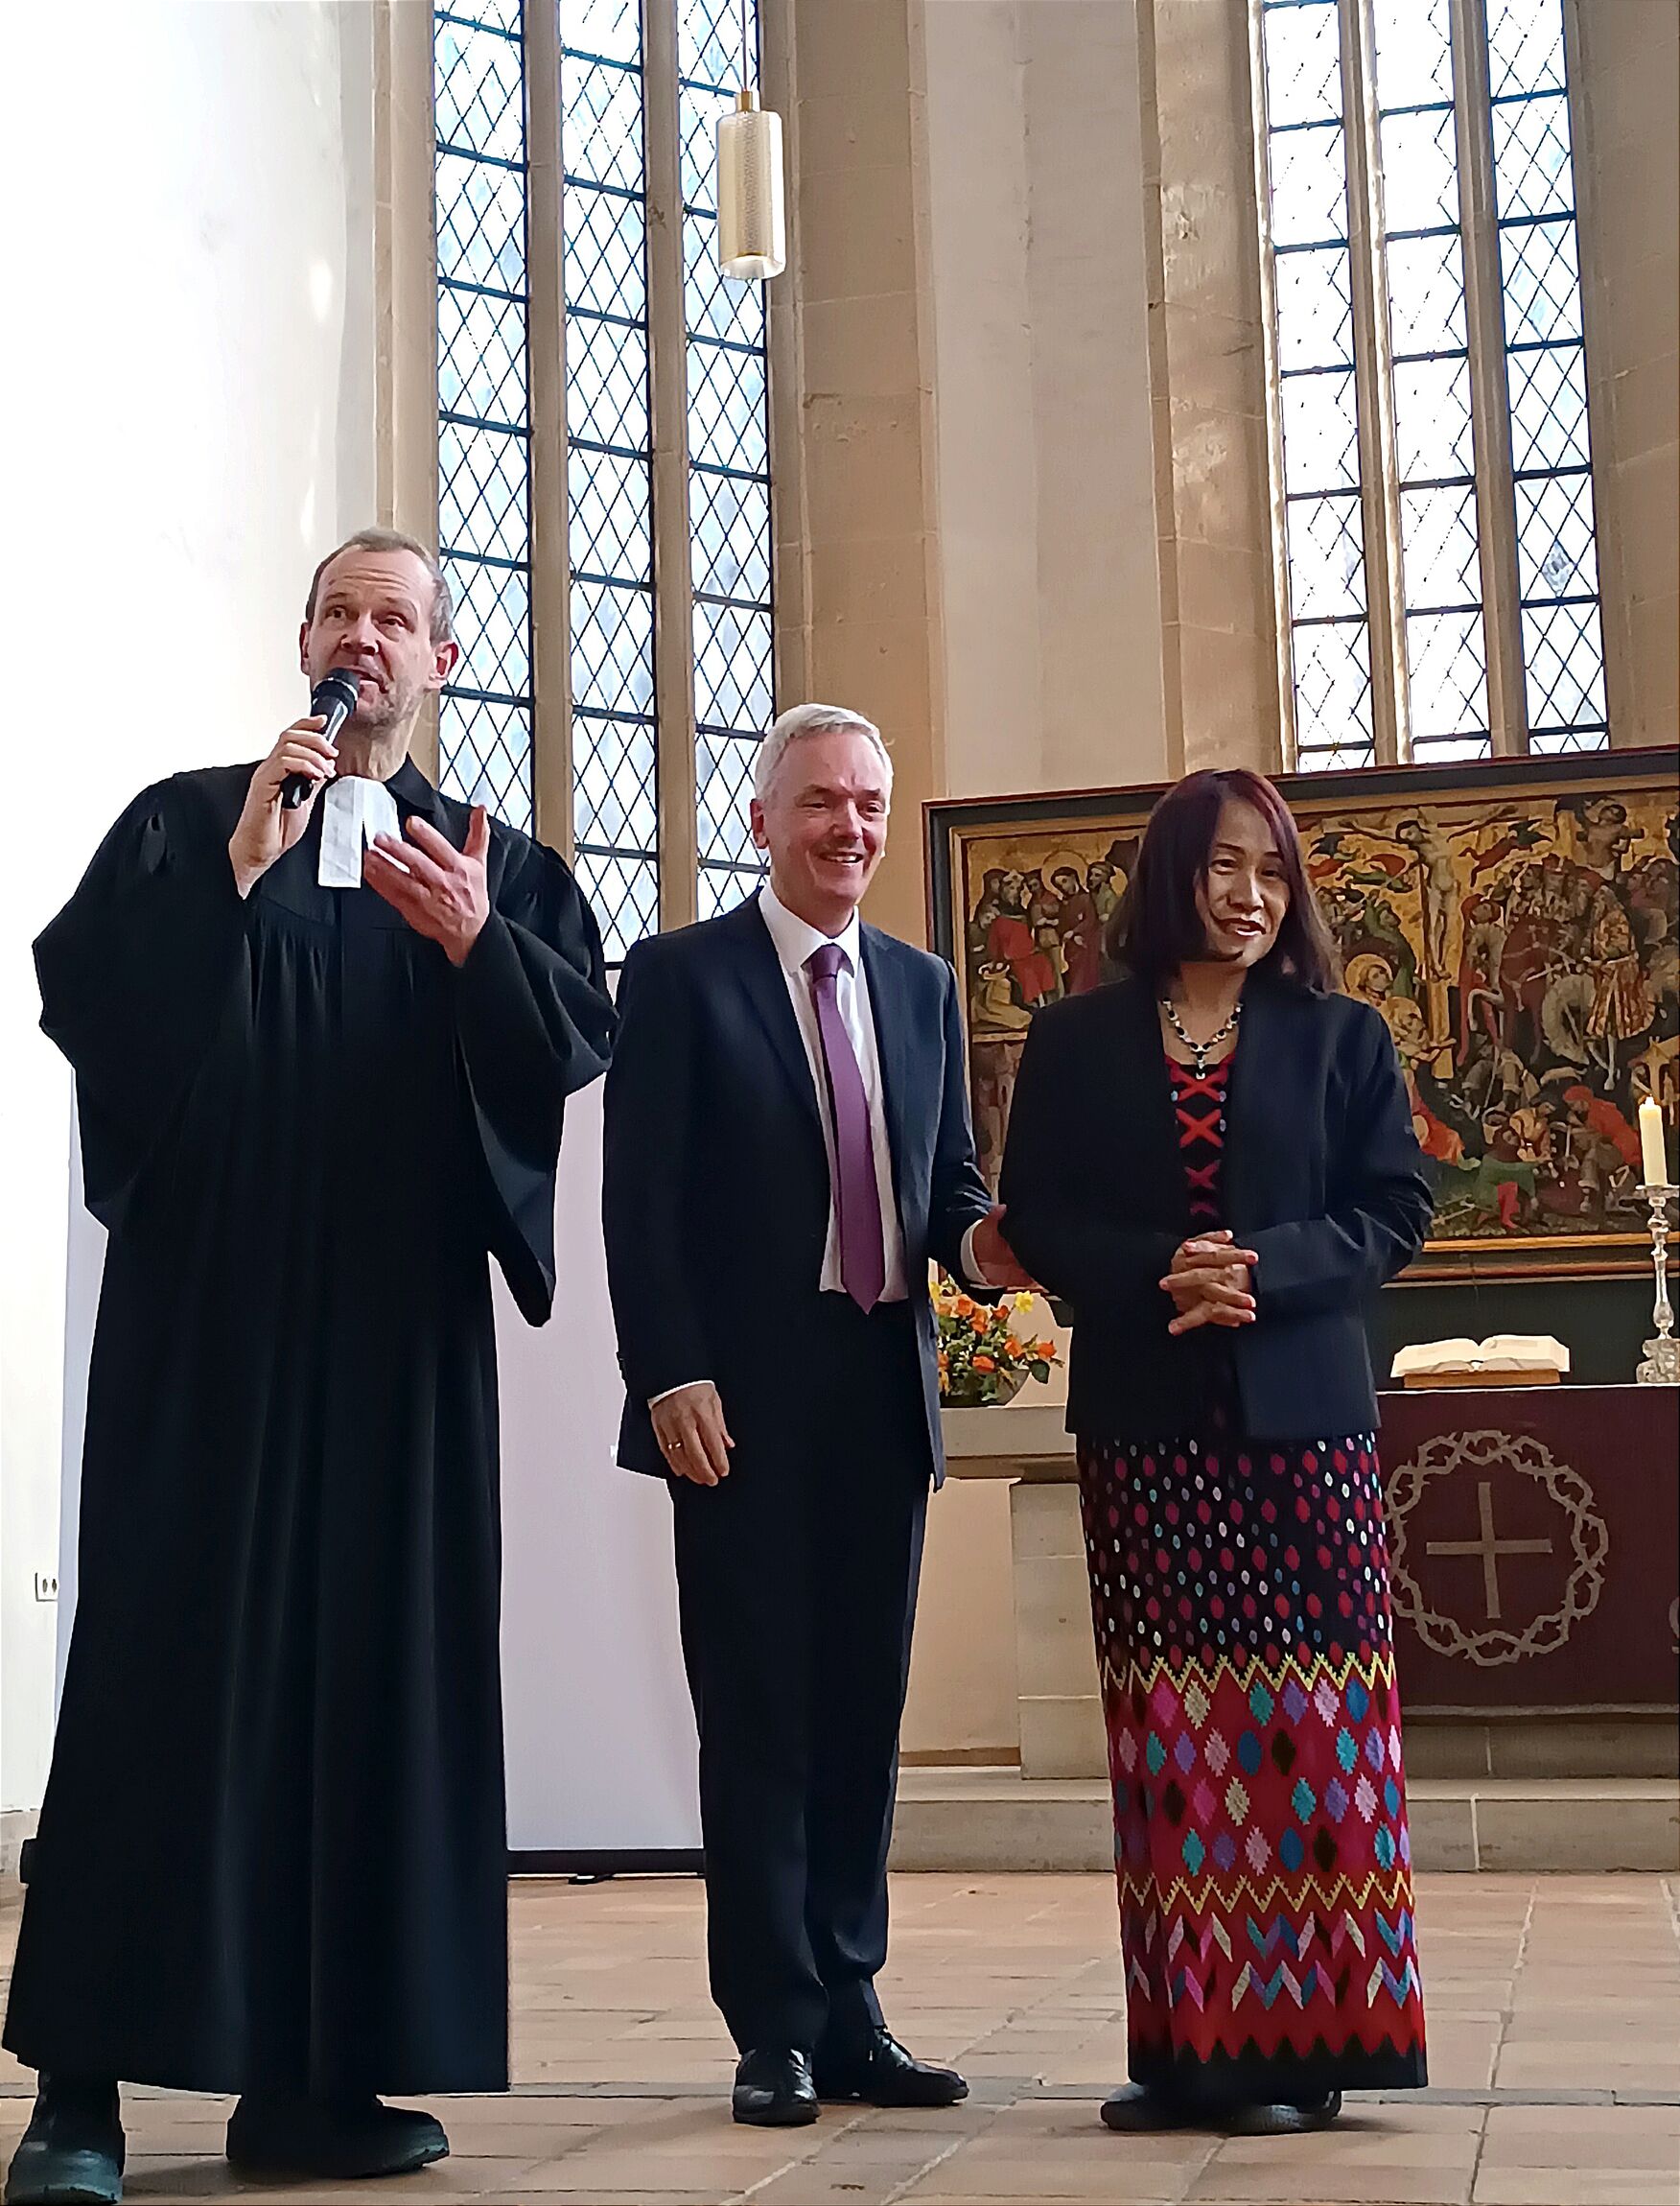 St. Lamberti, Pastor Noß-Kolbe, Pastor Chrzanowski und Frau Kwai Nan im Gottesdienst